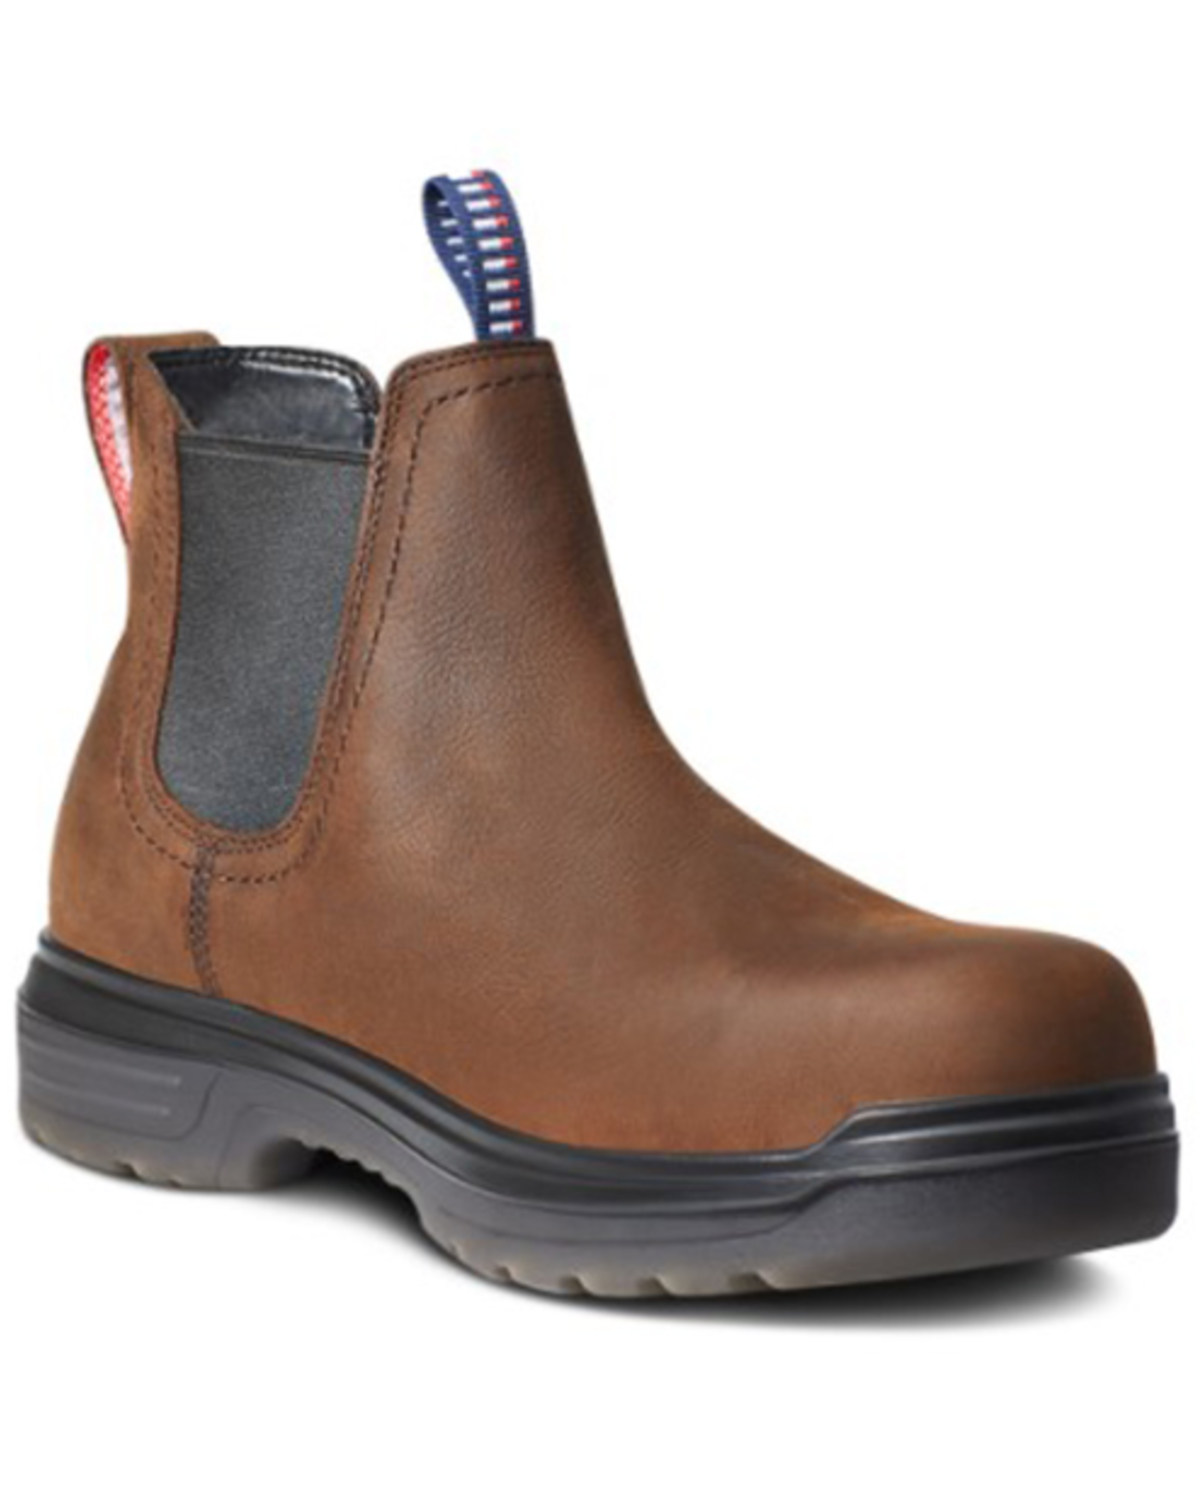 Ariat Men's Turbo USA Waterproof Work Boots - Composite Toe